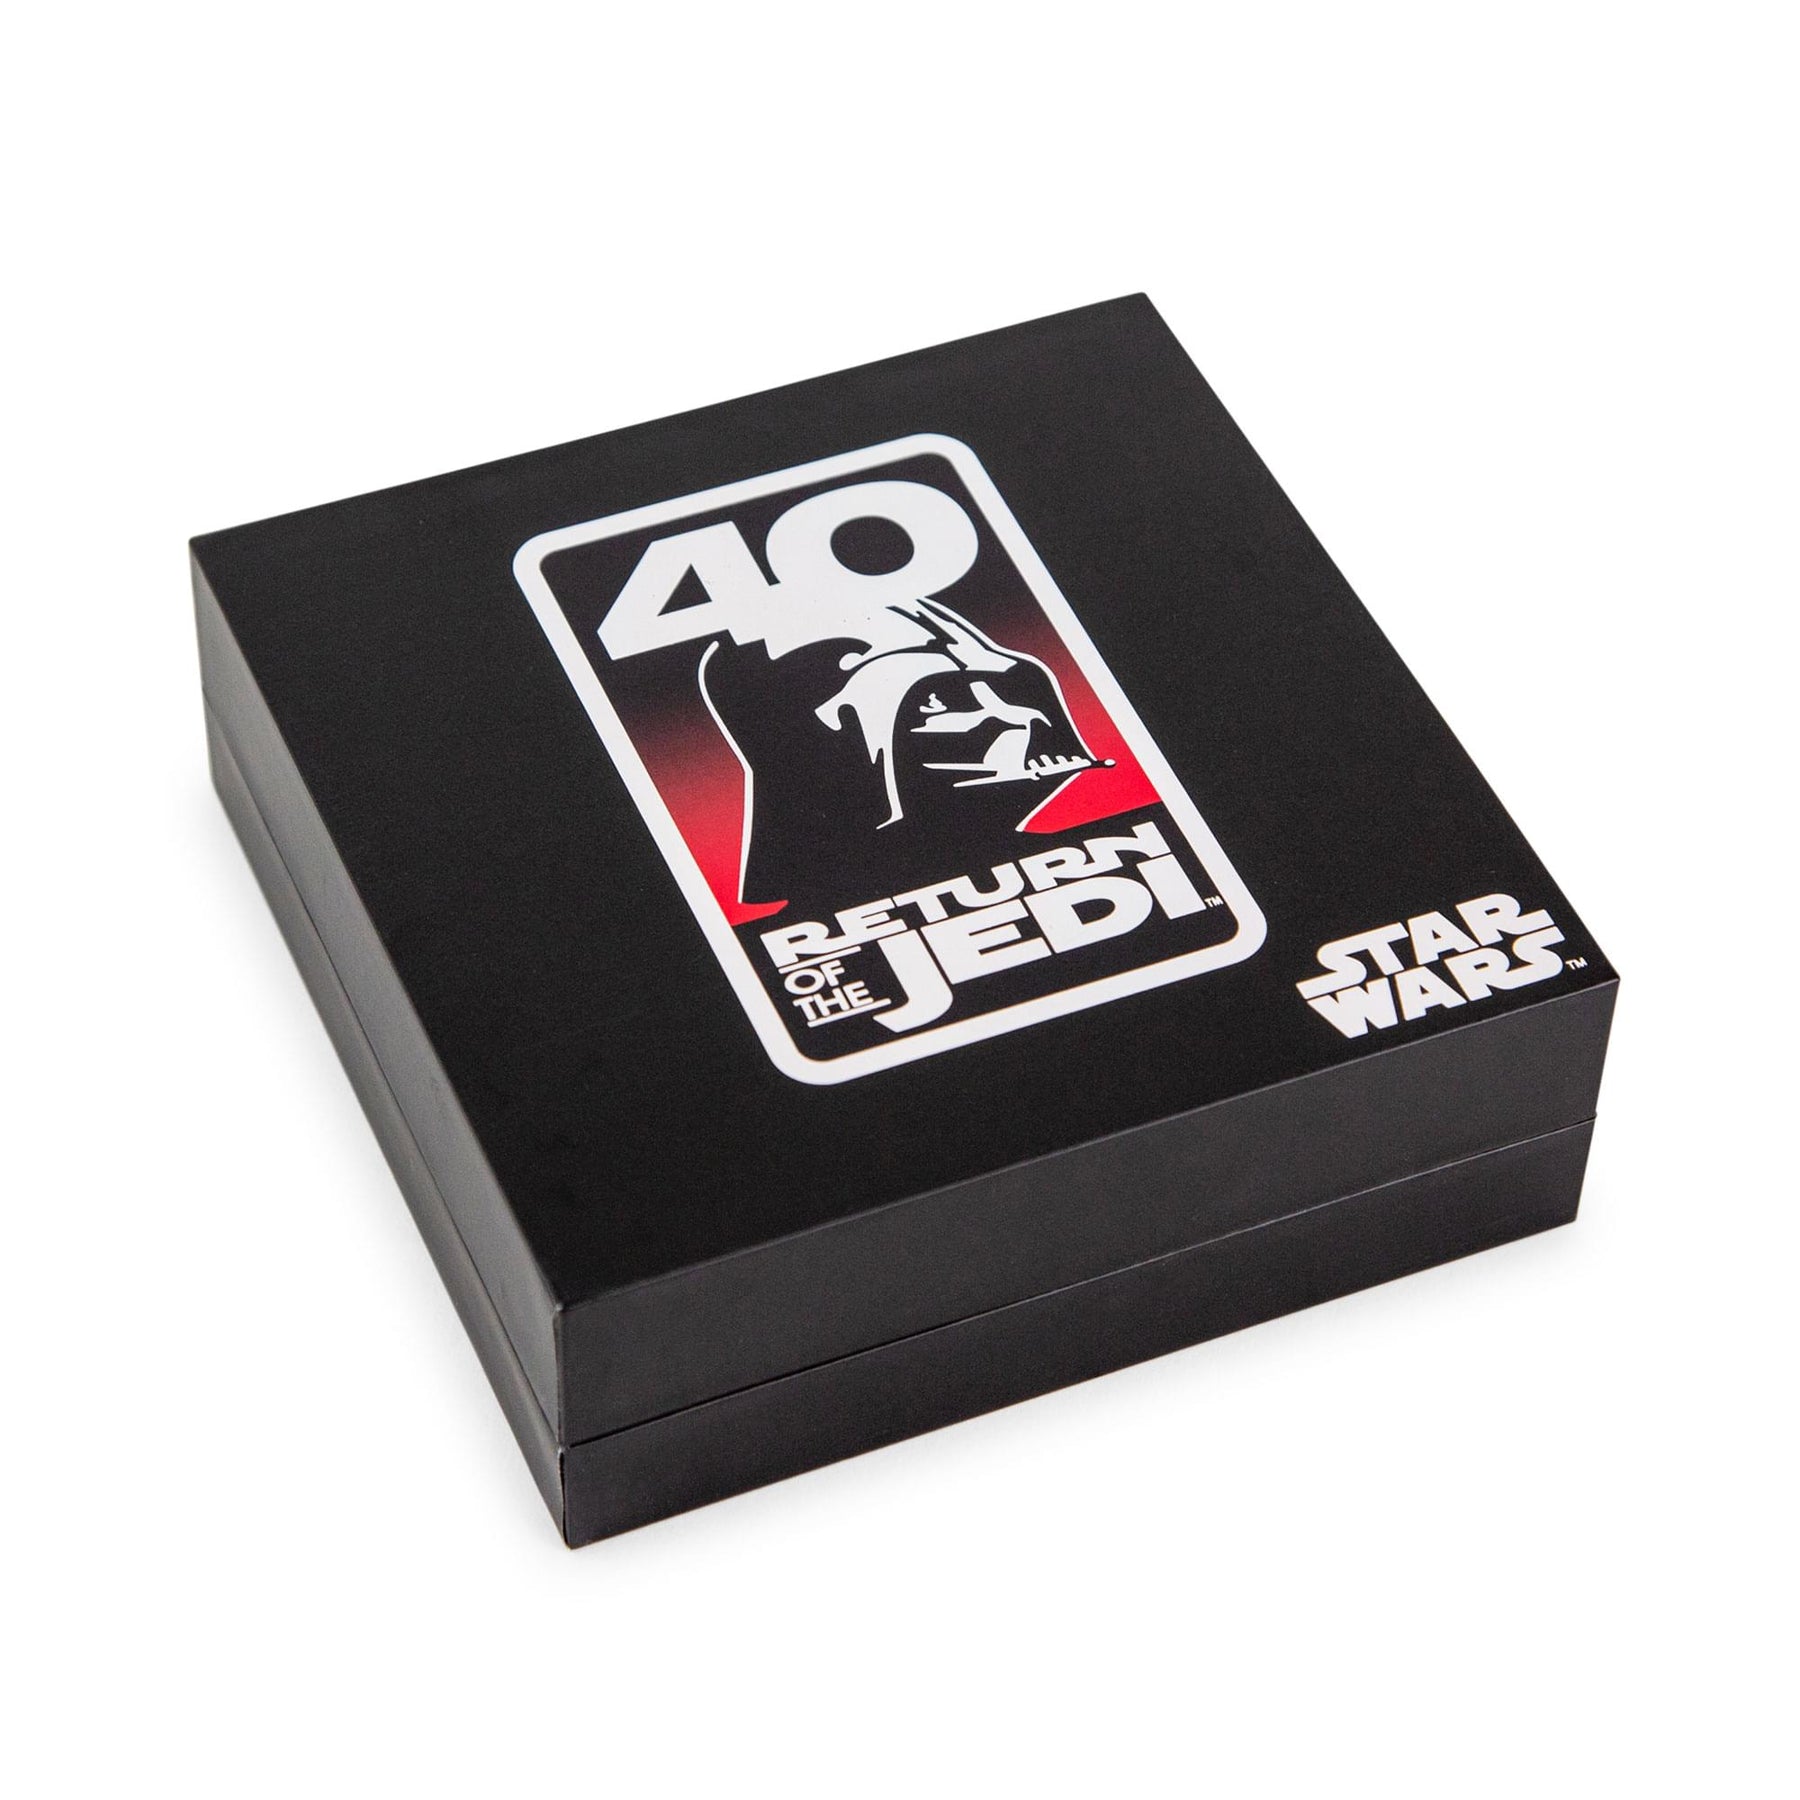 Star Wars: Return of the Jedi Yoda Blissl Necklace Replica & Enamel Pin Box Set